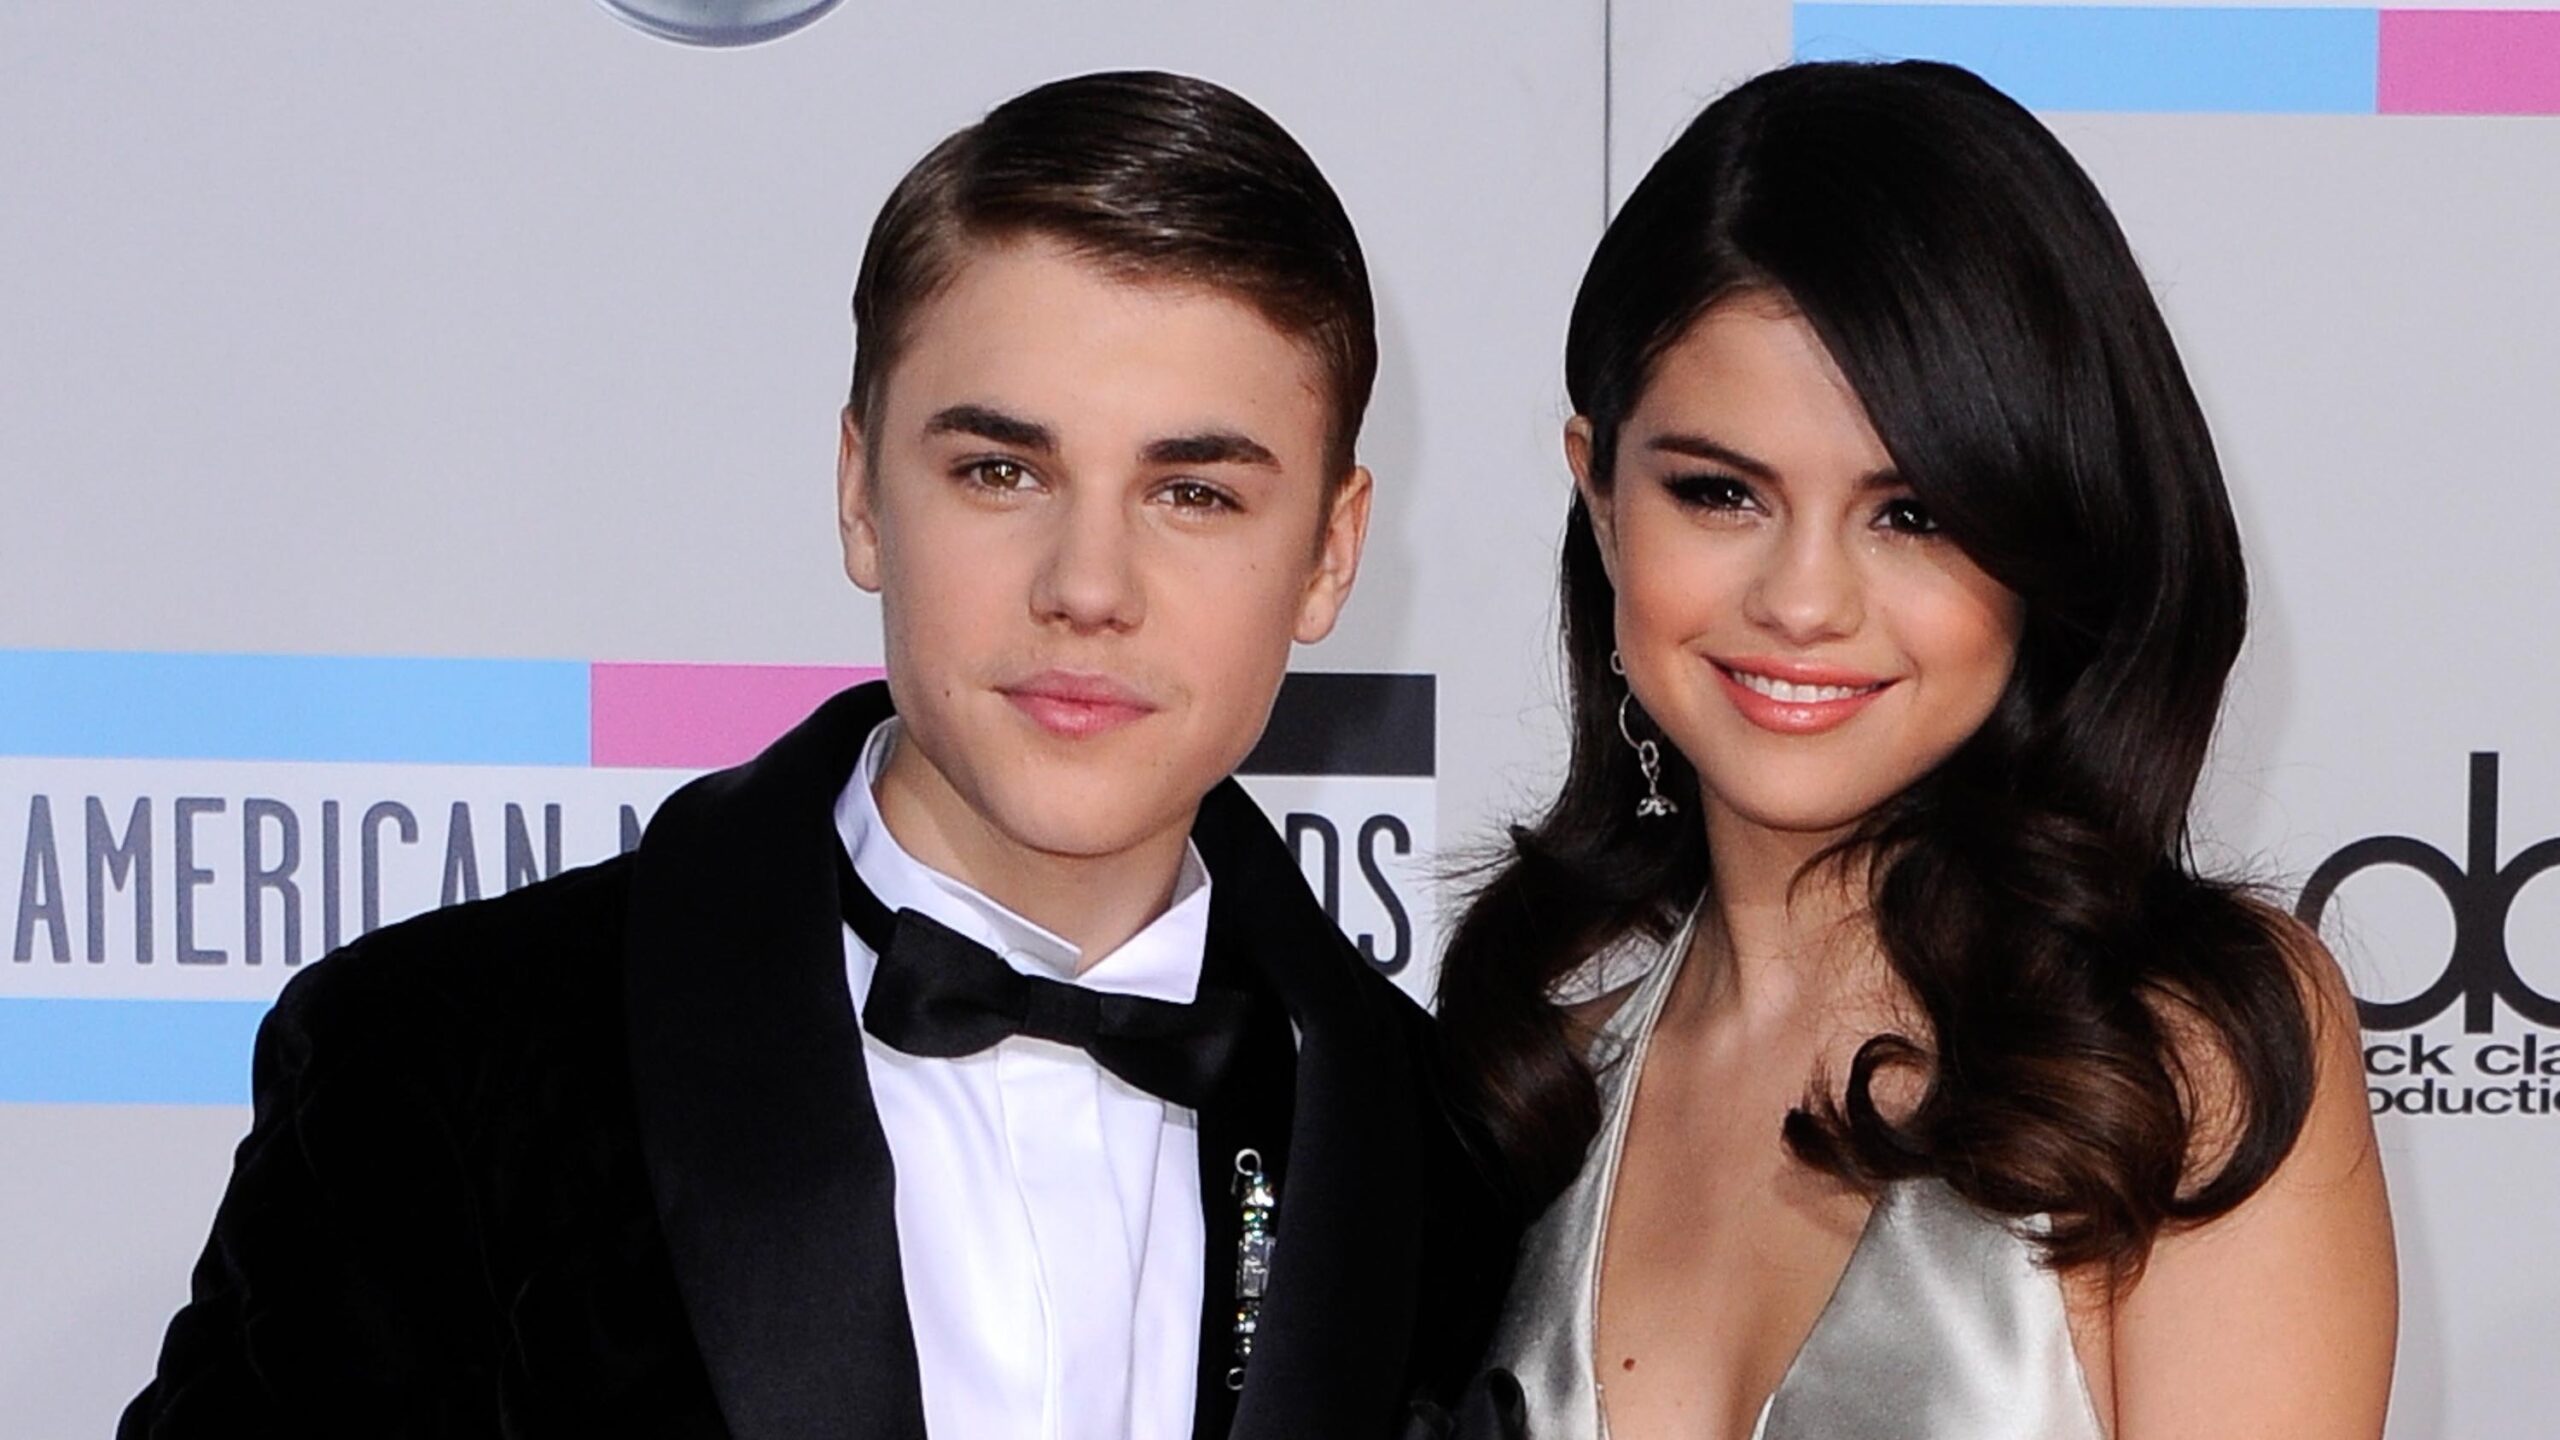 Justin Bieber and Selena Gomez feud on Instagram